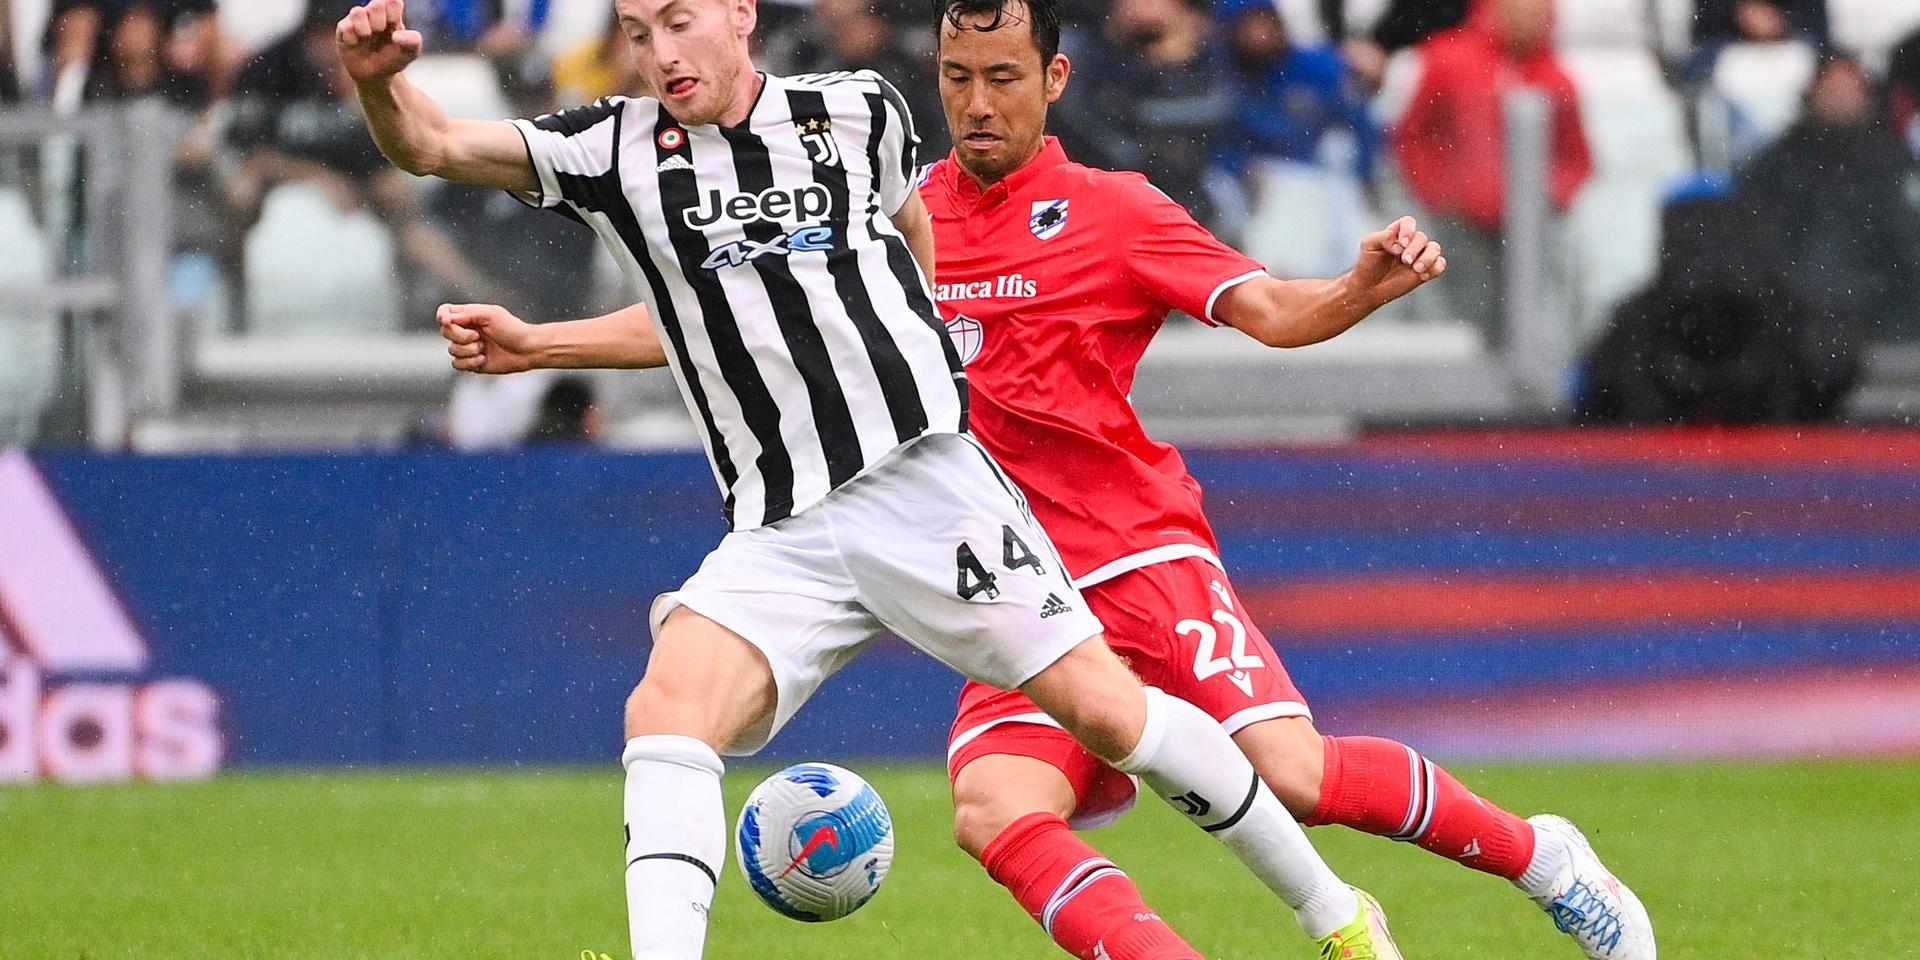 Juventus svenske anfallare Dejan Kulusevski i kamp om bollen med Sampdorias Maya Yoshida.